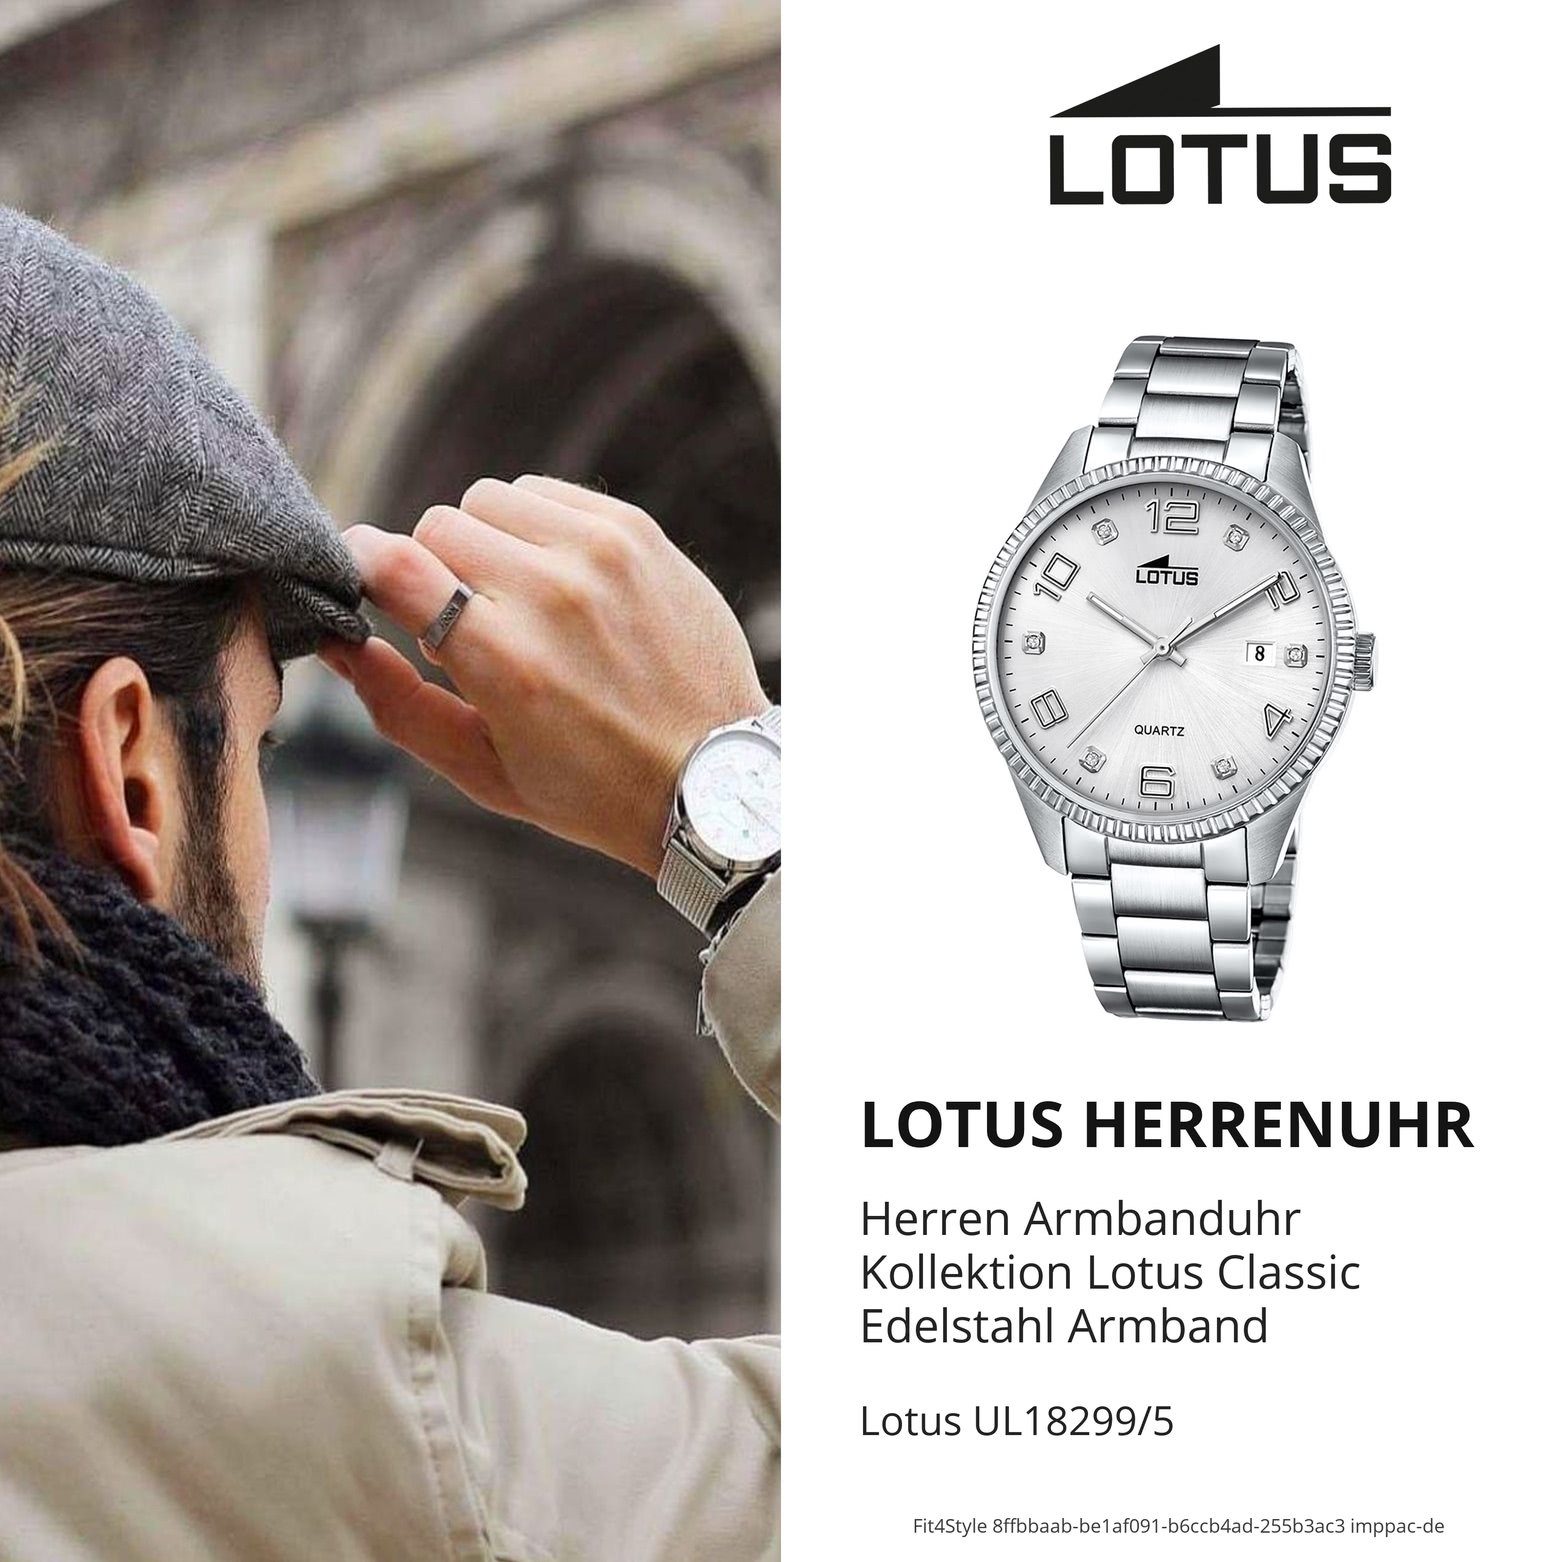 Lotus Quarzuhr Lotus L18299/5, rund, Edelstahlarmband silber Herren Uhr Elegant Herren Armbanduhr